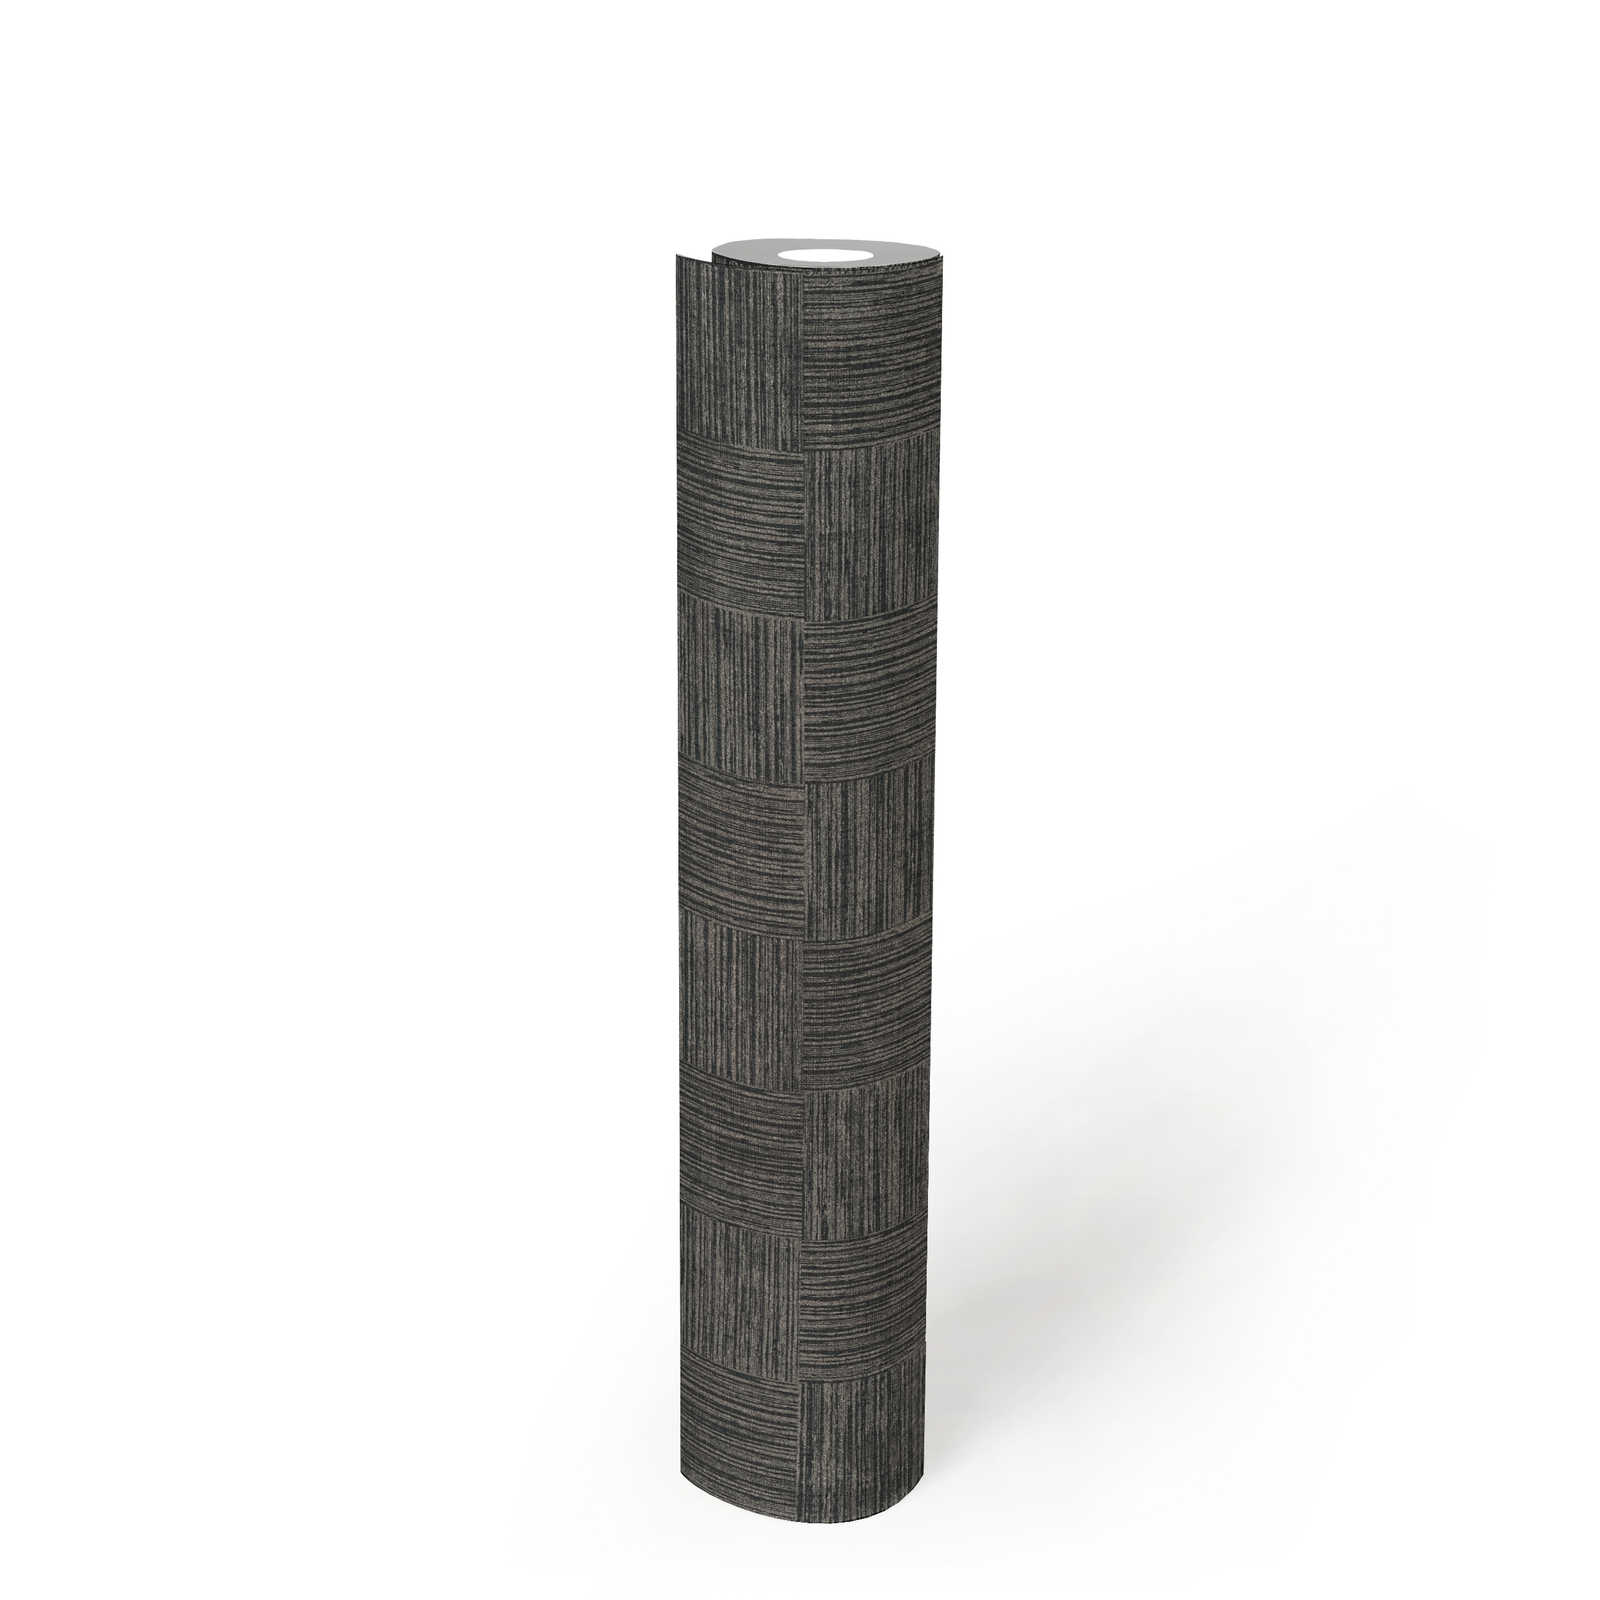             Carta da parati effetto legno struttura screziata - metallizzata, nera
        